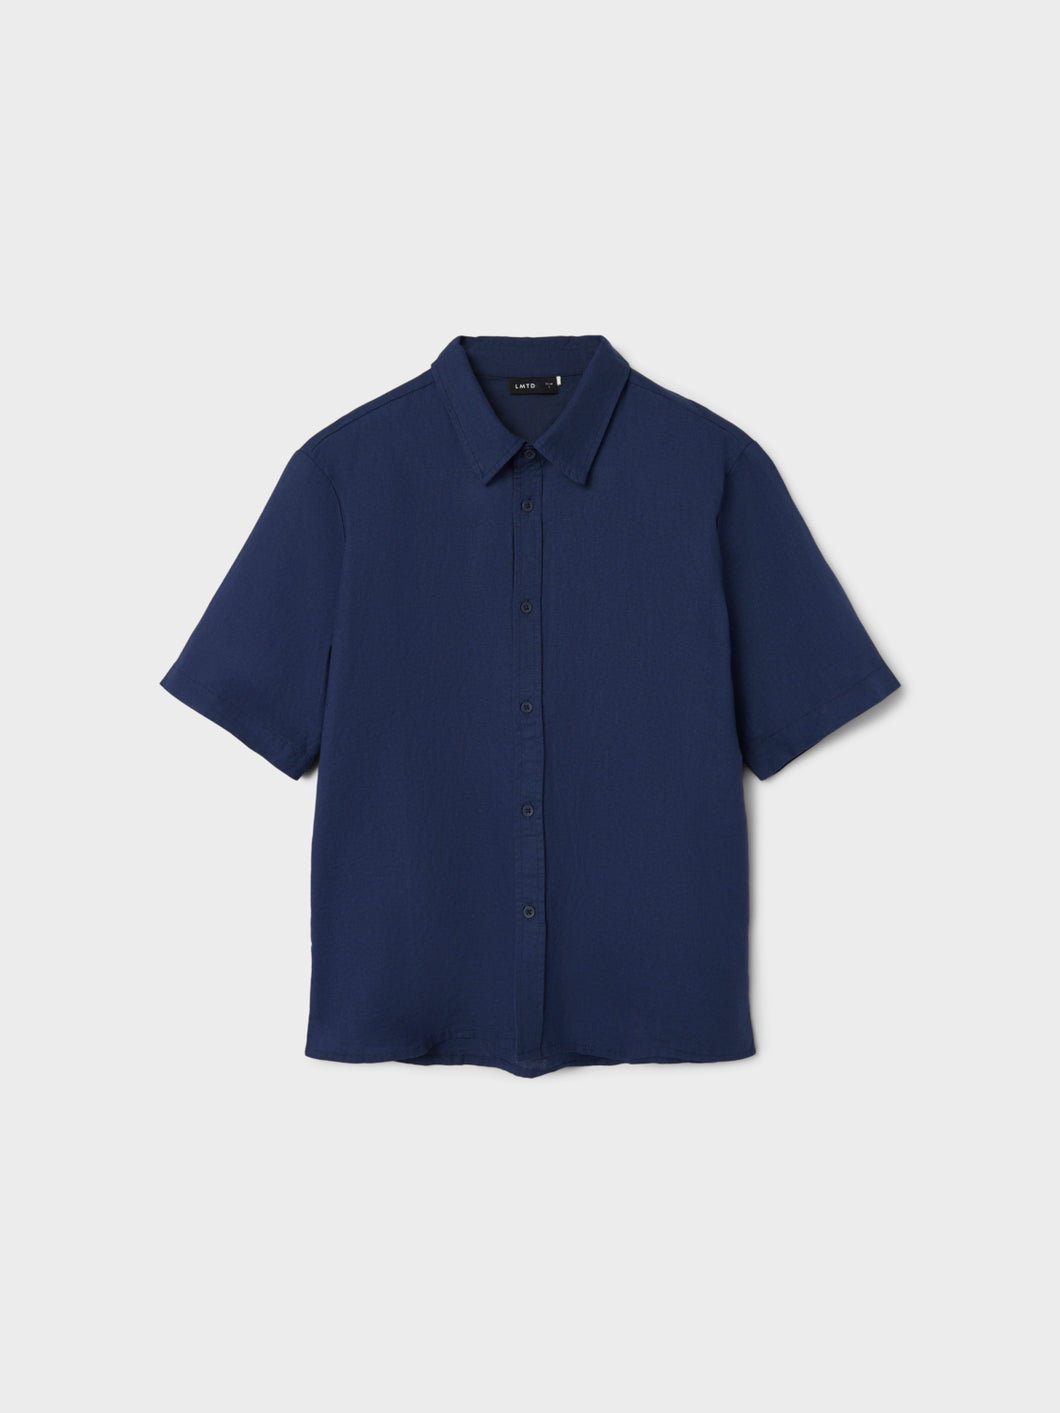 NLNHILL Shirts - Navy Blazer